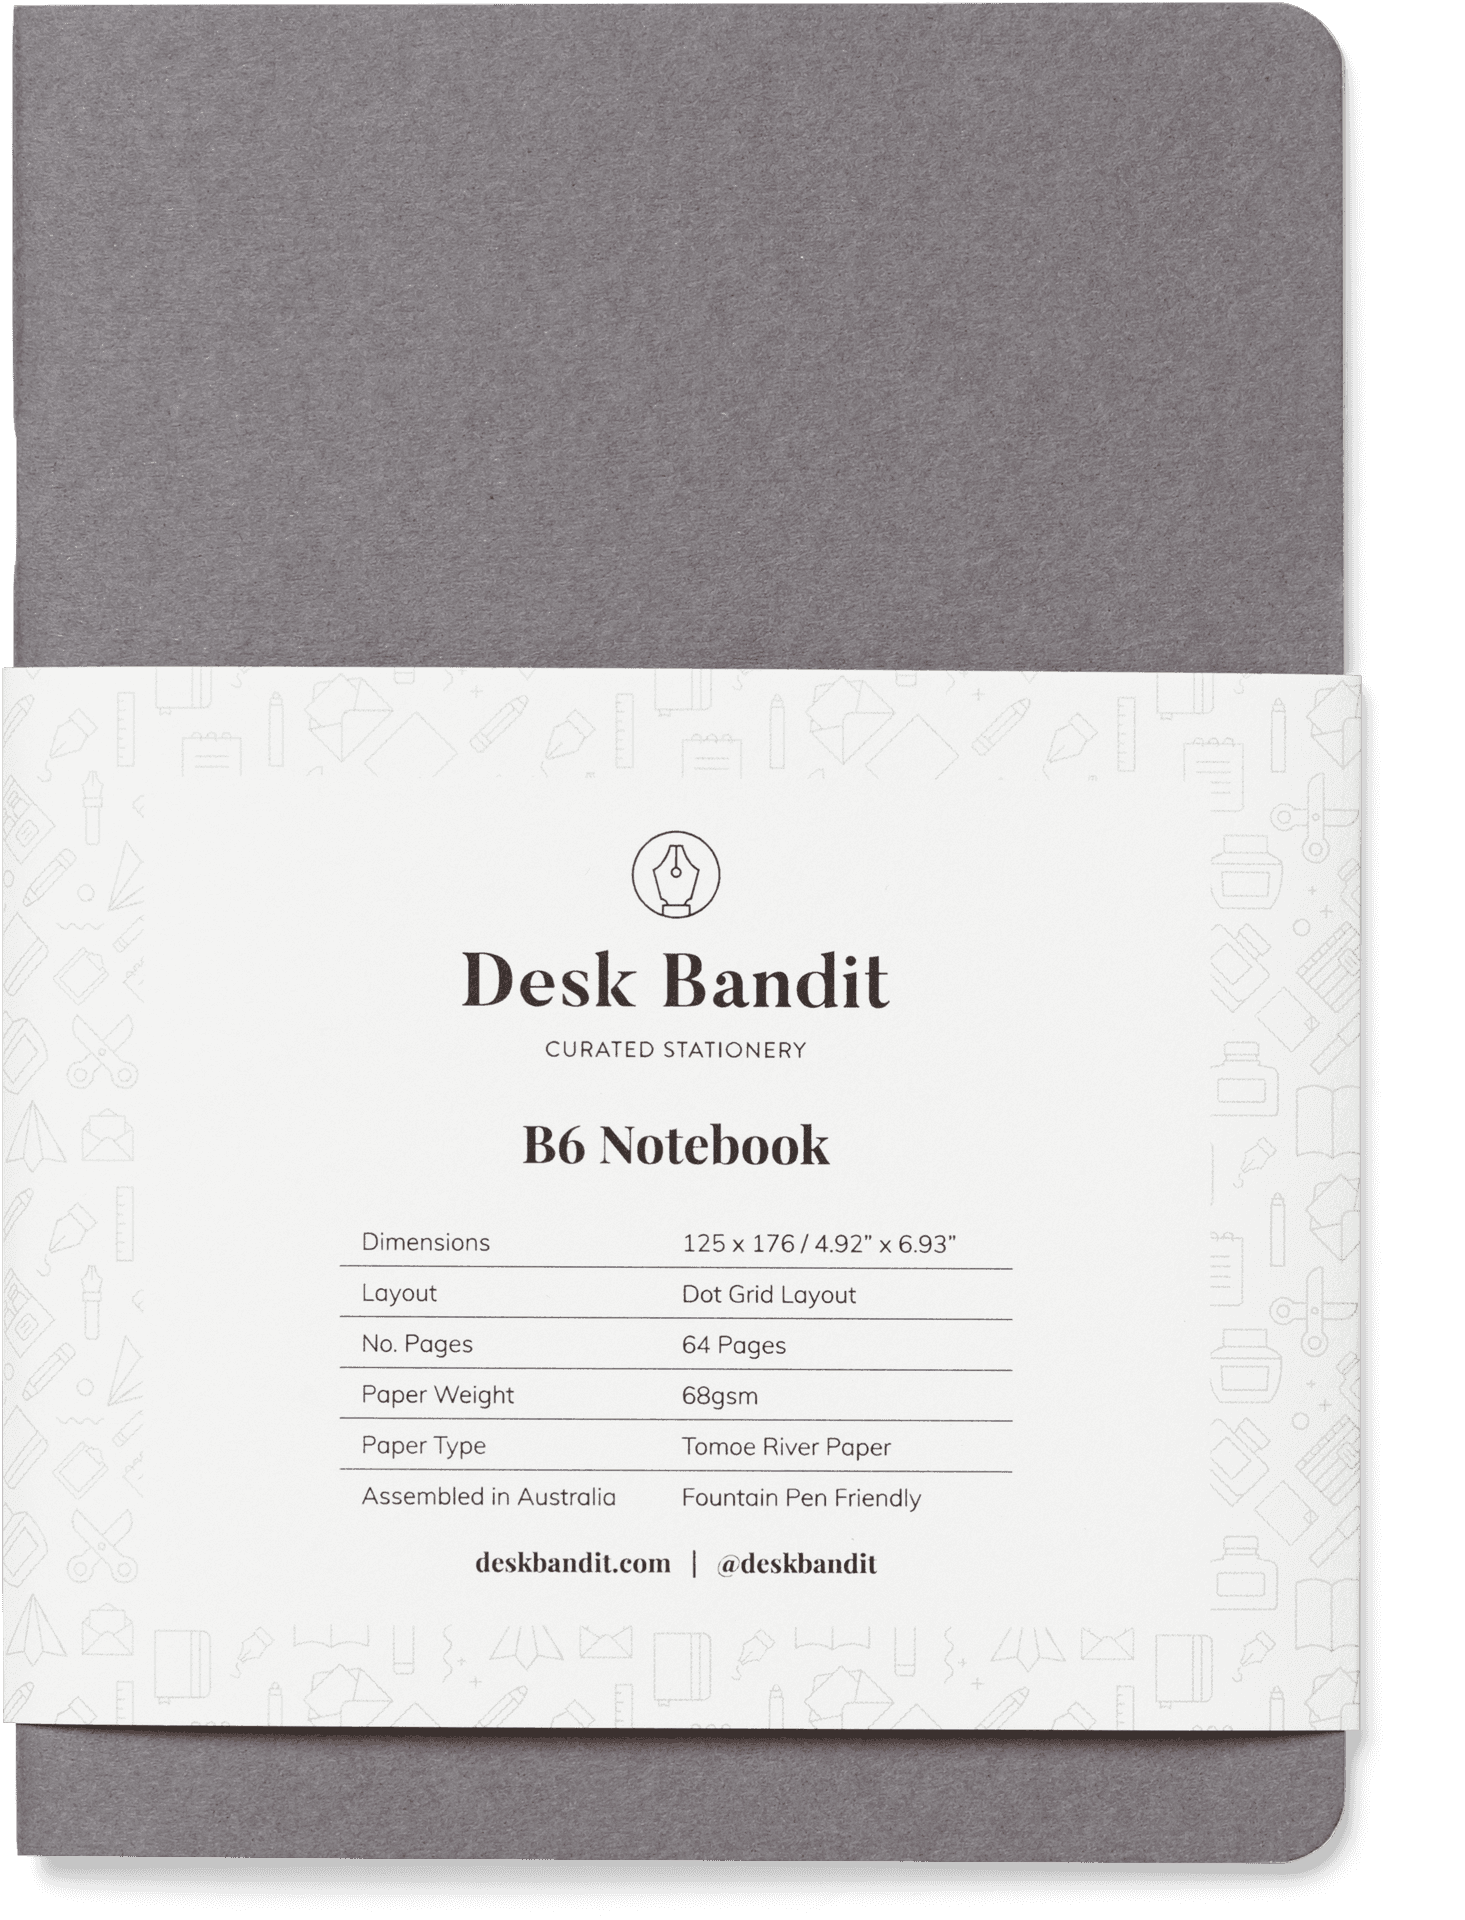 Desk Bandit B6 Notebook Product Image PNG